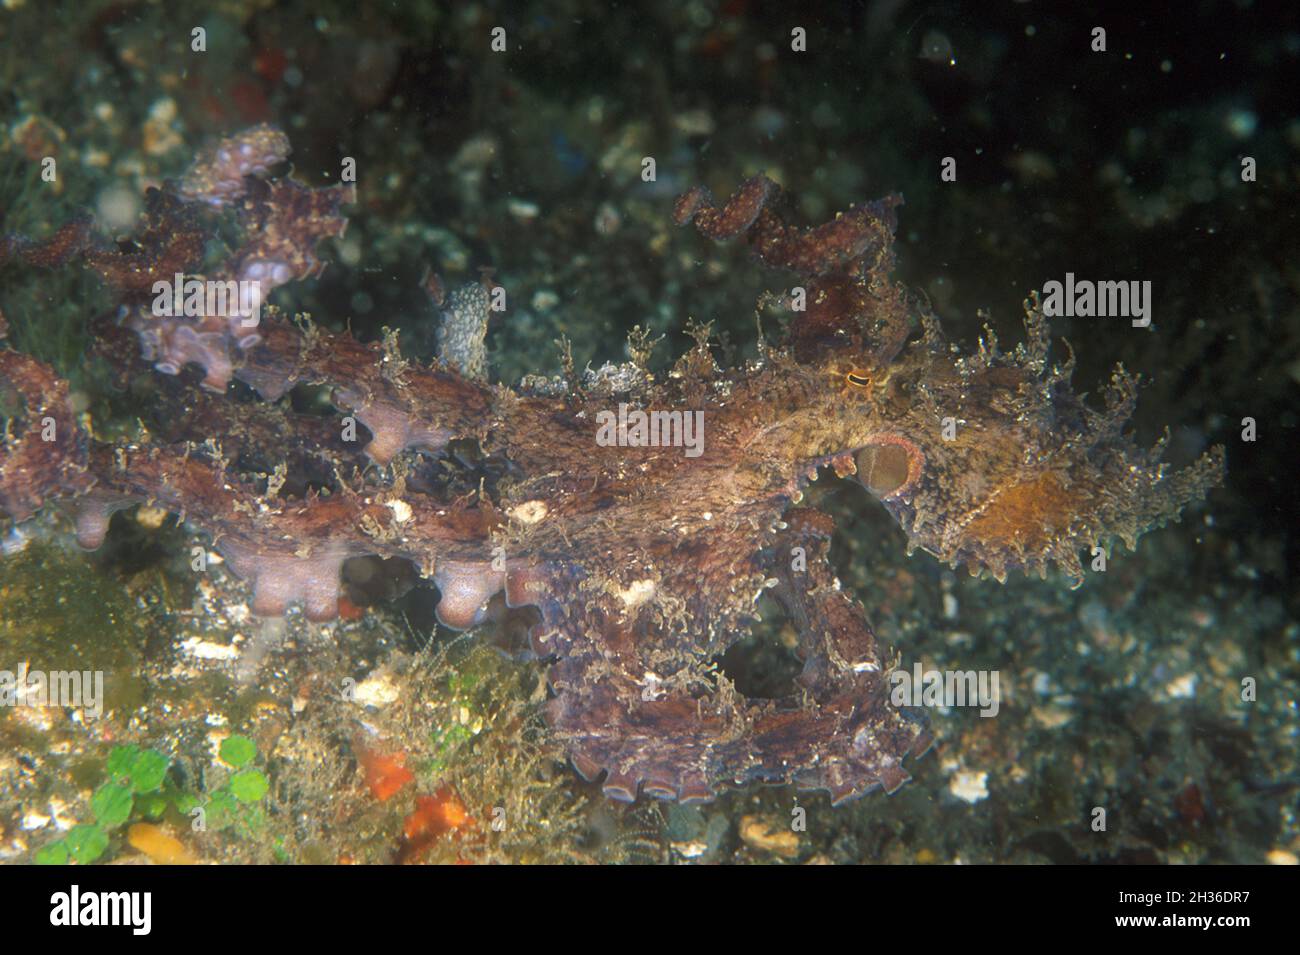 Algae Octopus, Abdopus aculeatus, Lembeh Straits, near Bitung, Sulawesi, Indonesia, Asia Stock Photo